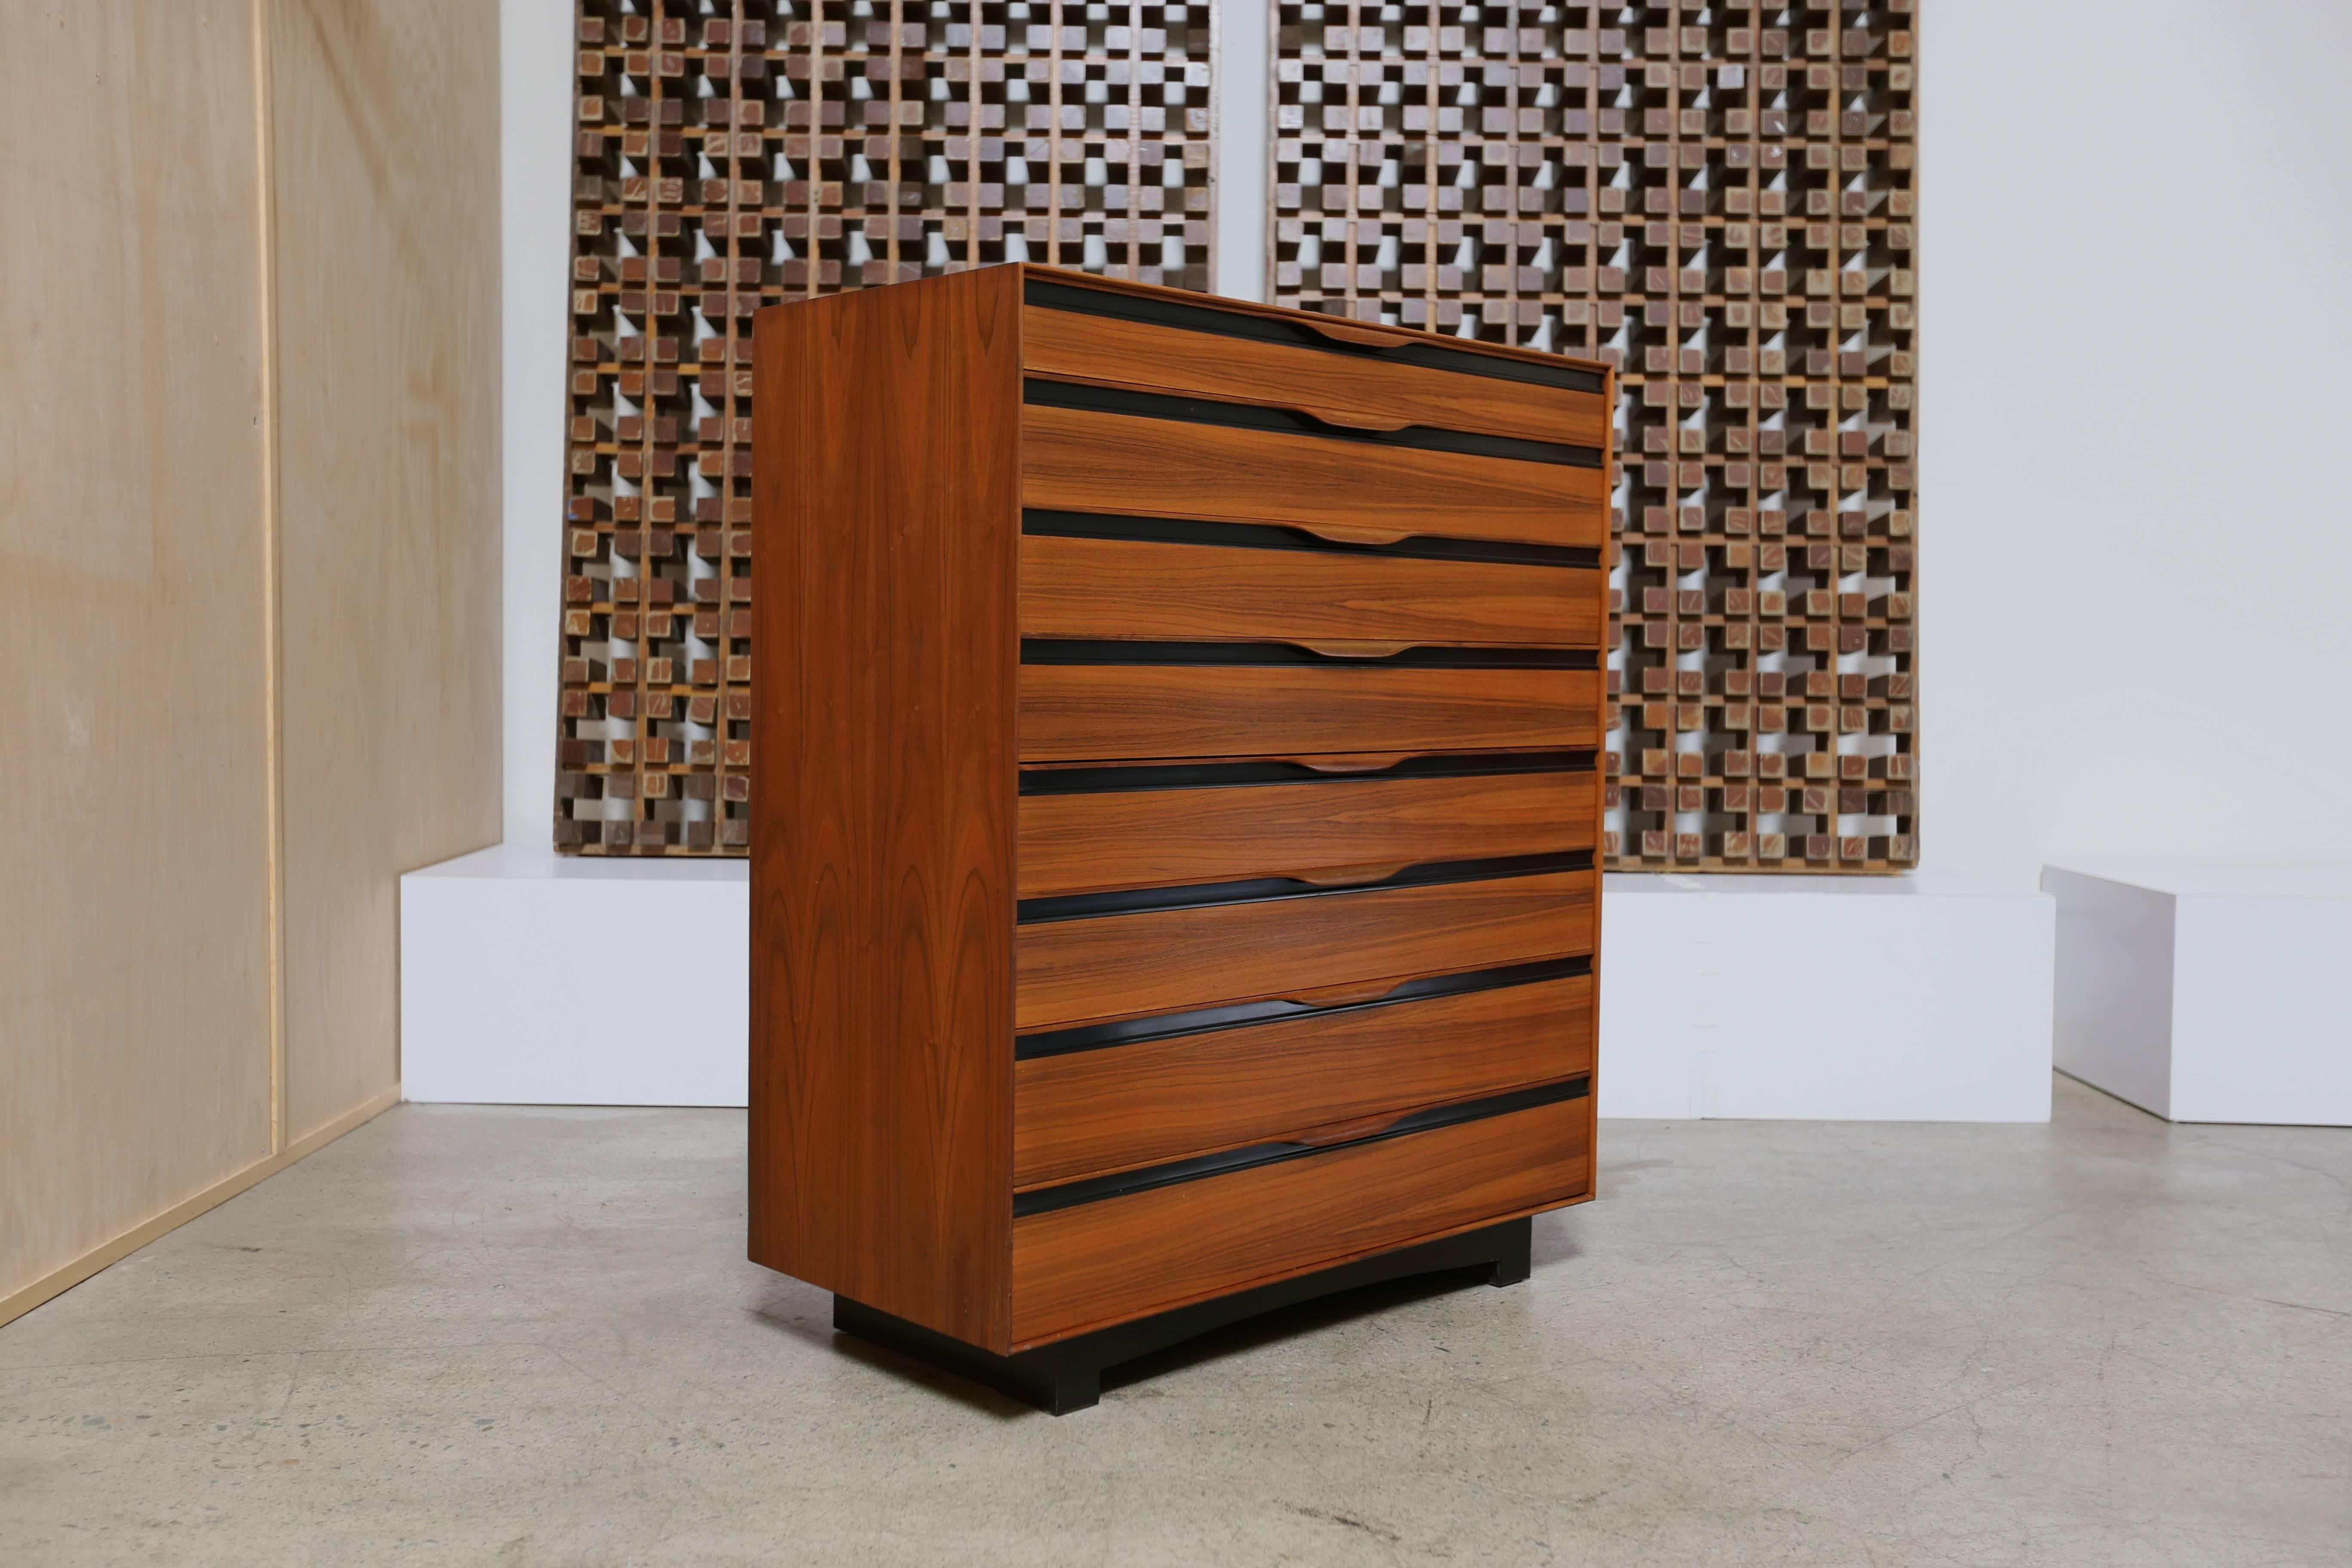 Tall / highboy walnut chest of eight drawers by John Kapel for Glenn of California. A iconic California Modern design.